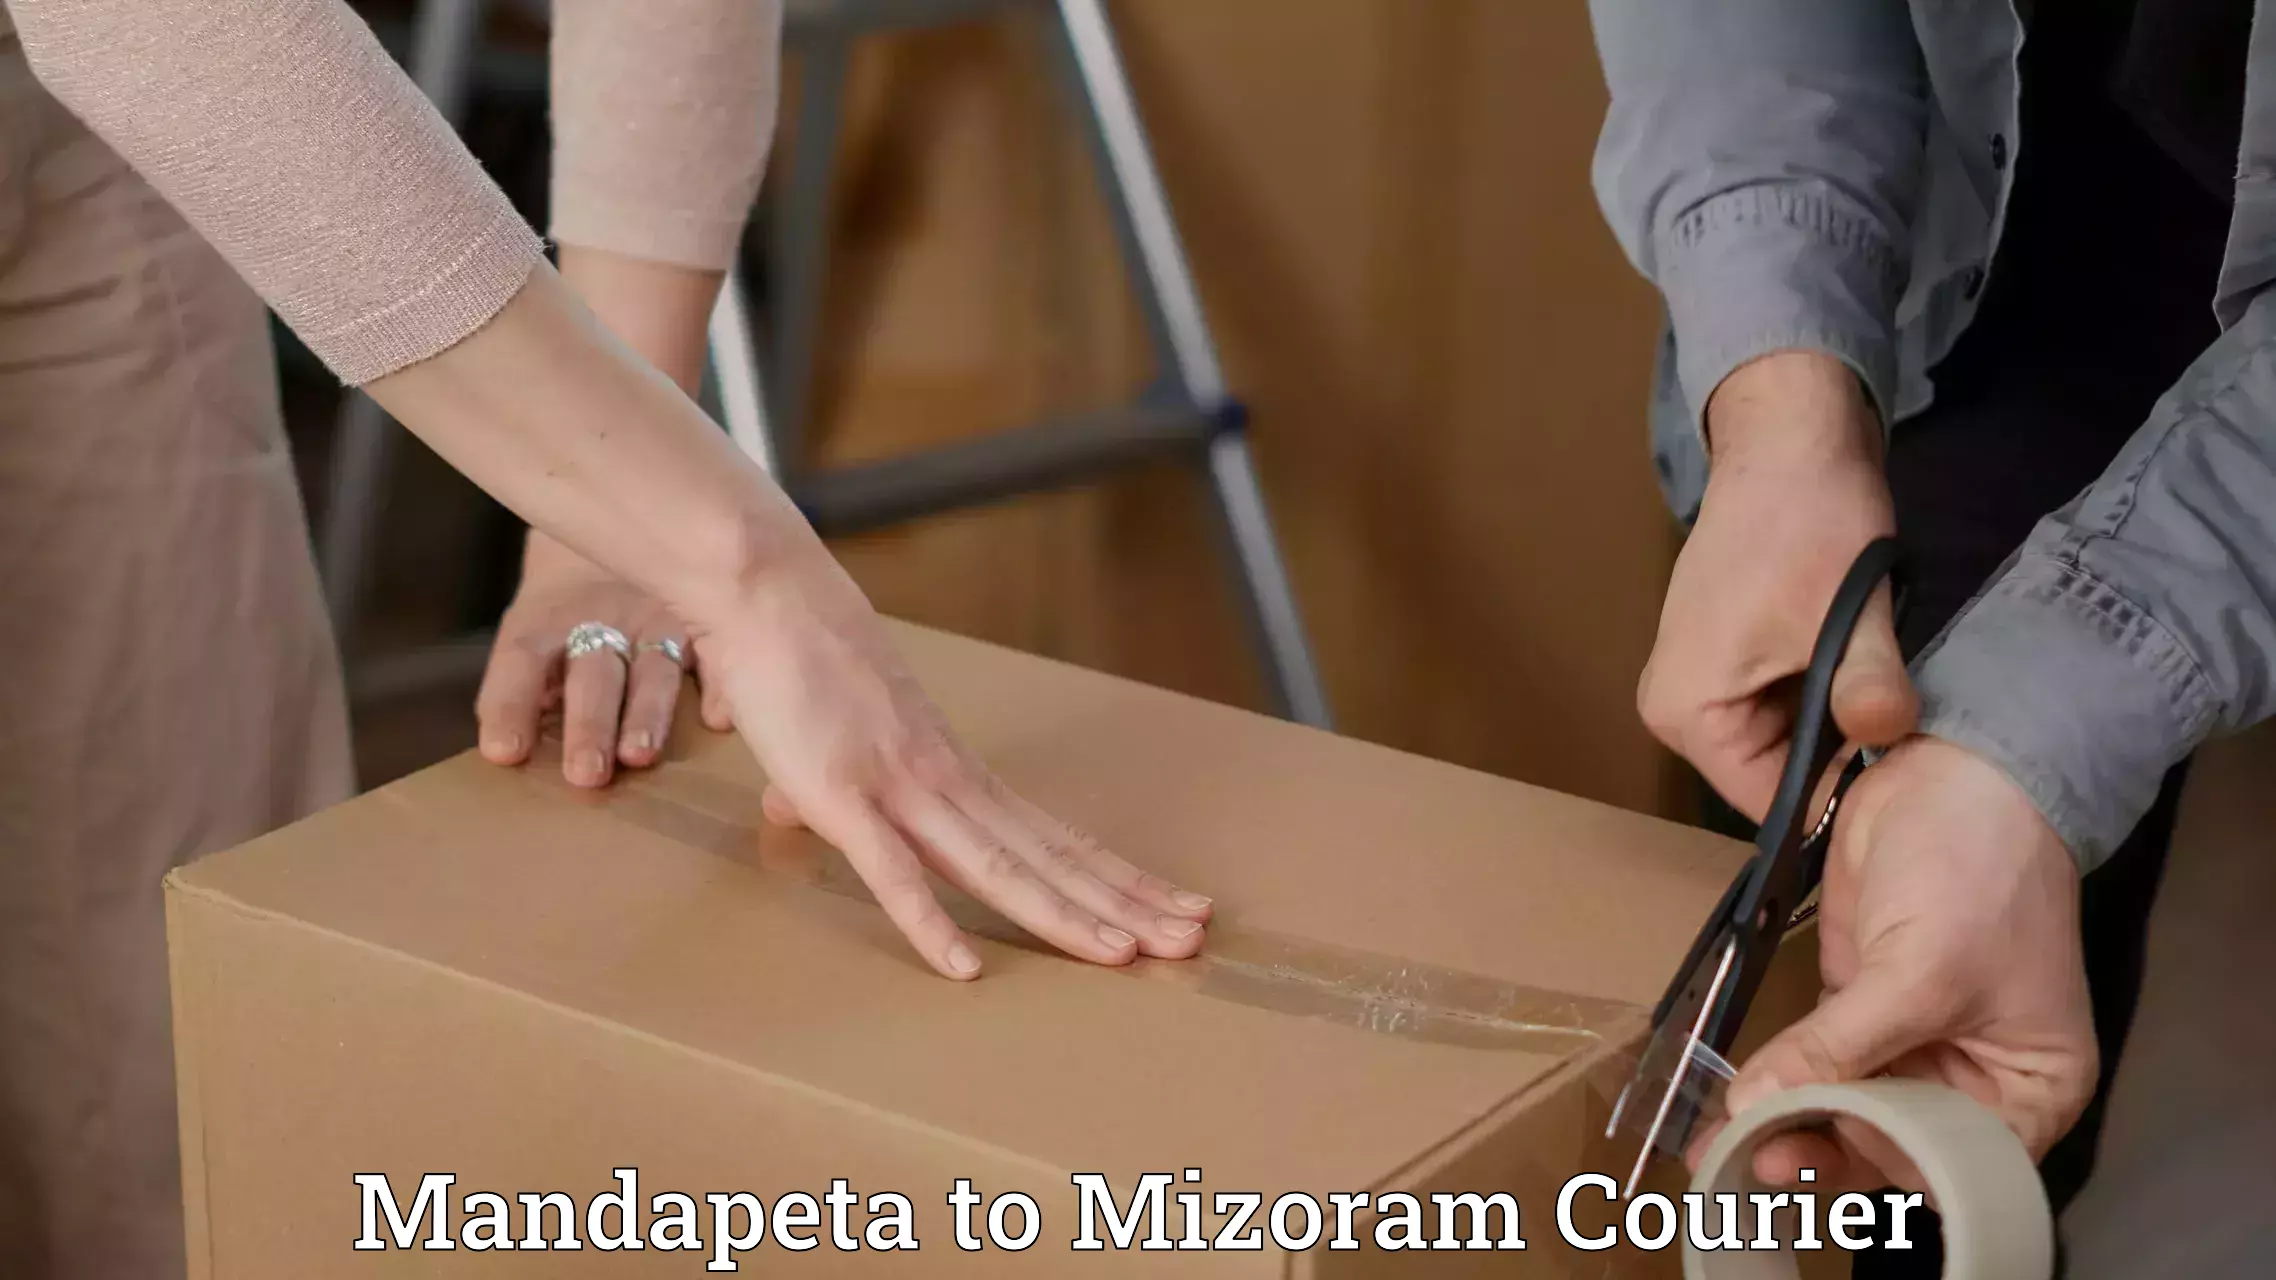 Tracking updates Mandapeta to Mizoram